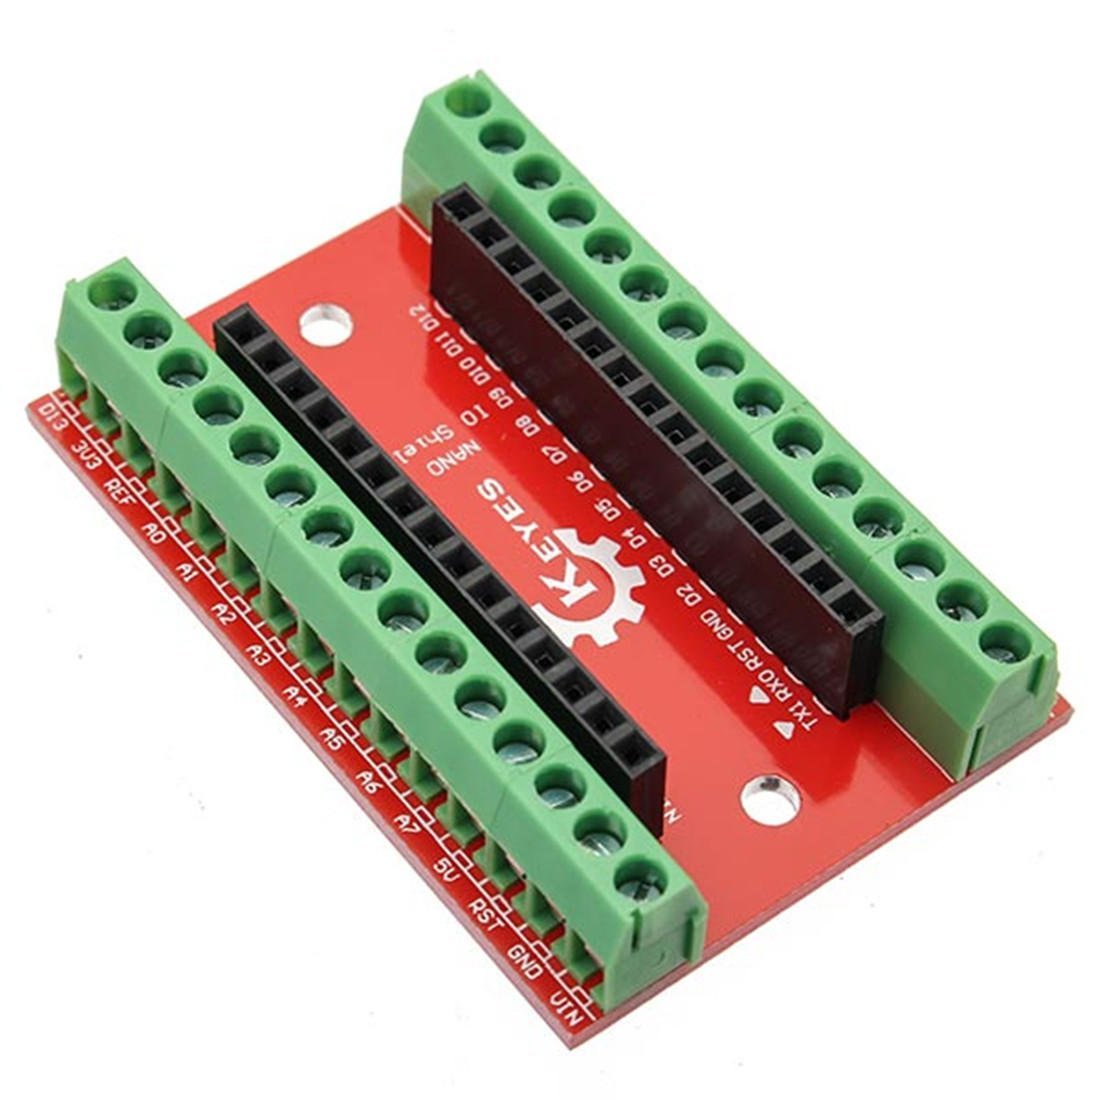 Buy Nano Board R3 With CH340 Chip Compatible Arduino india